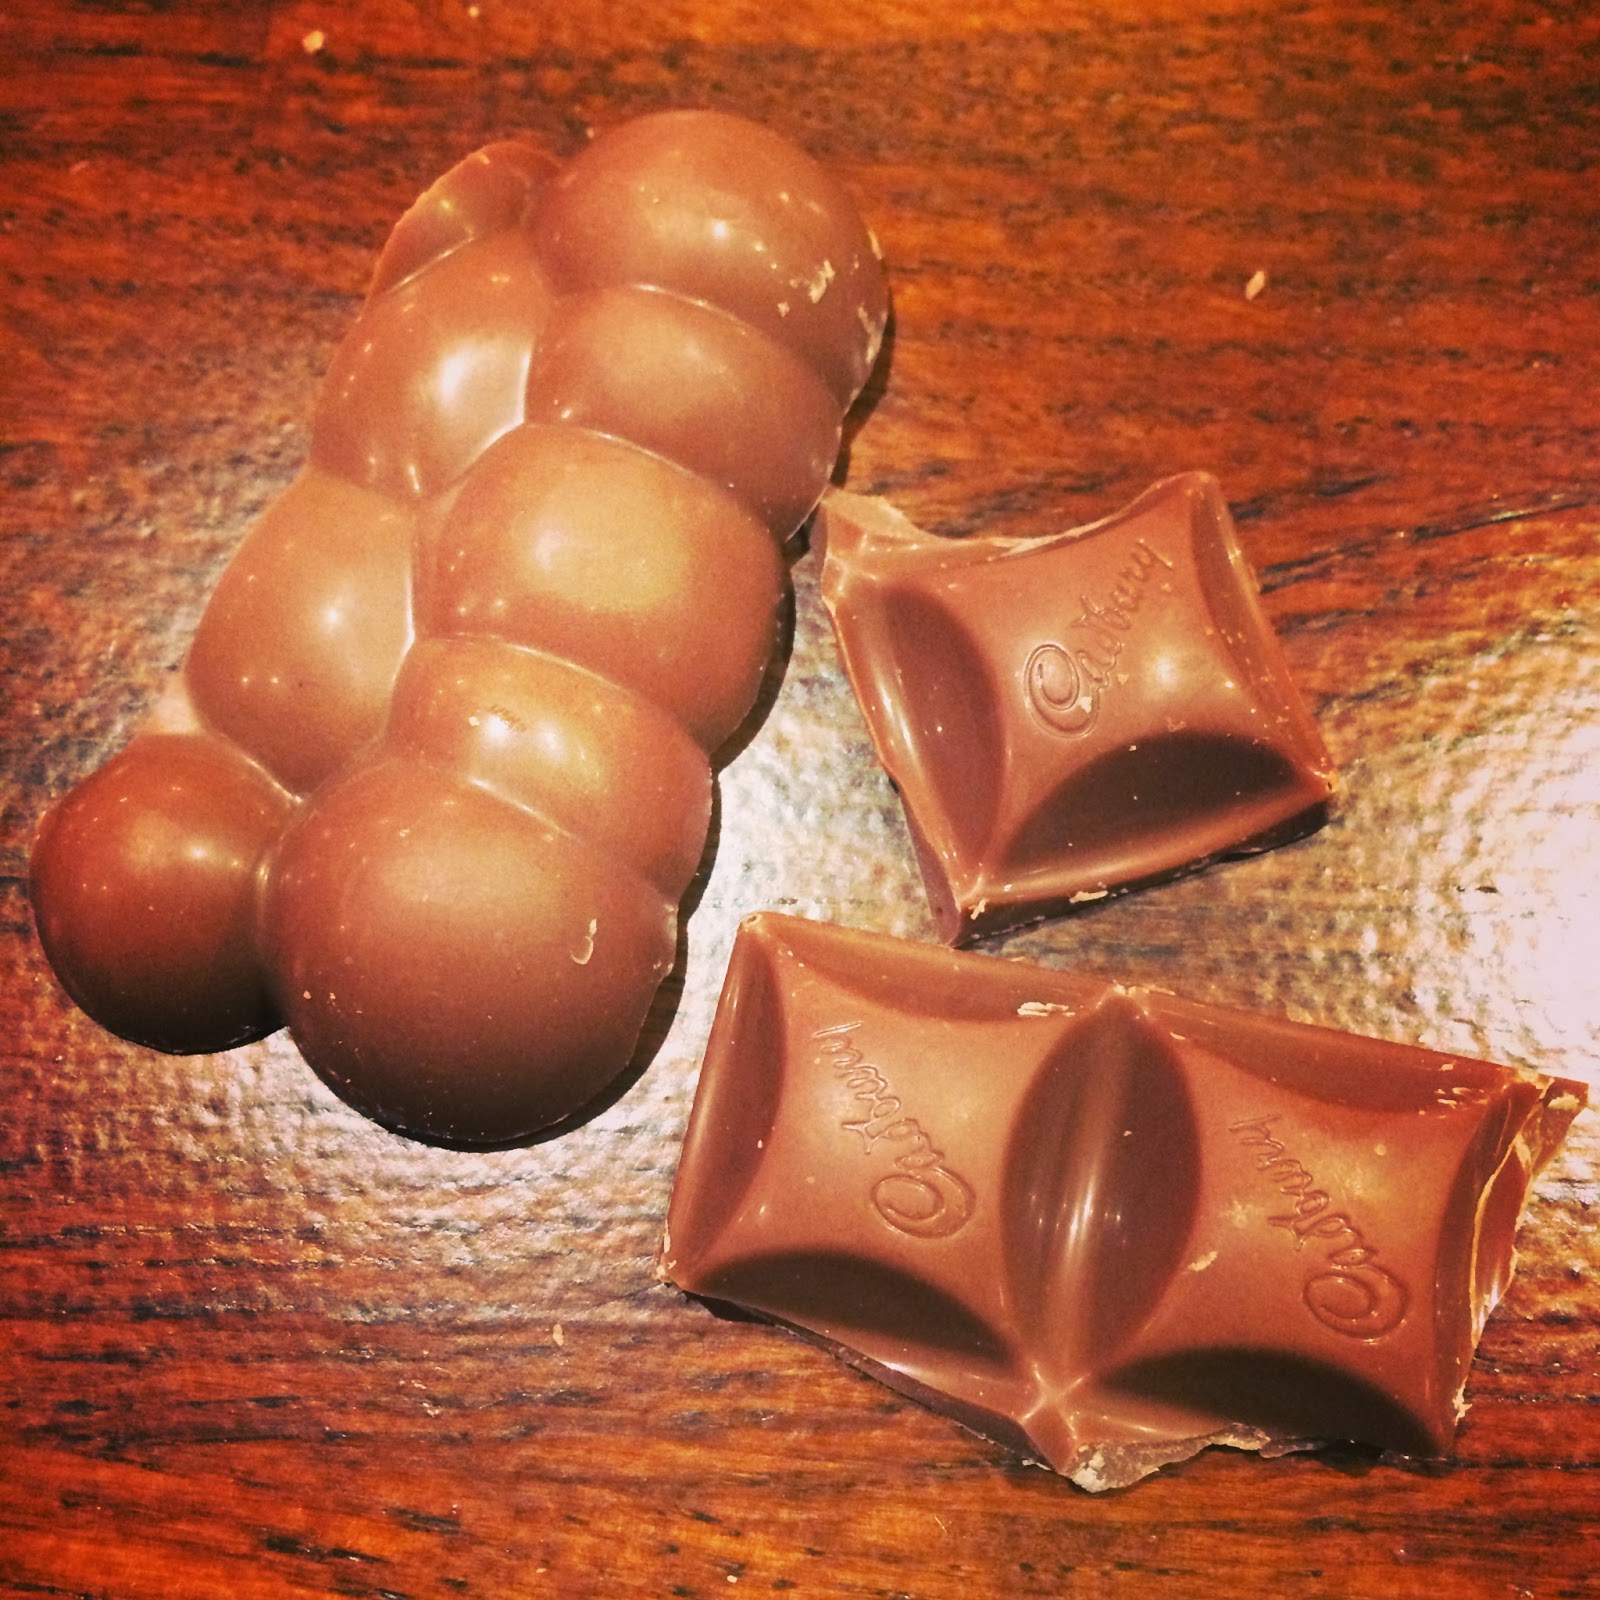 cadburys chocolate